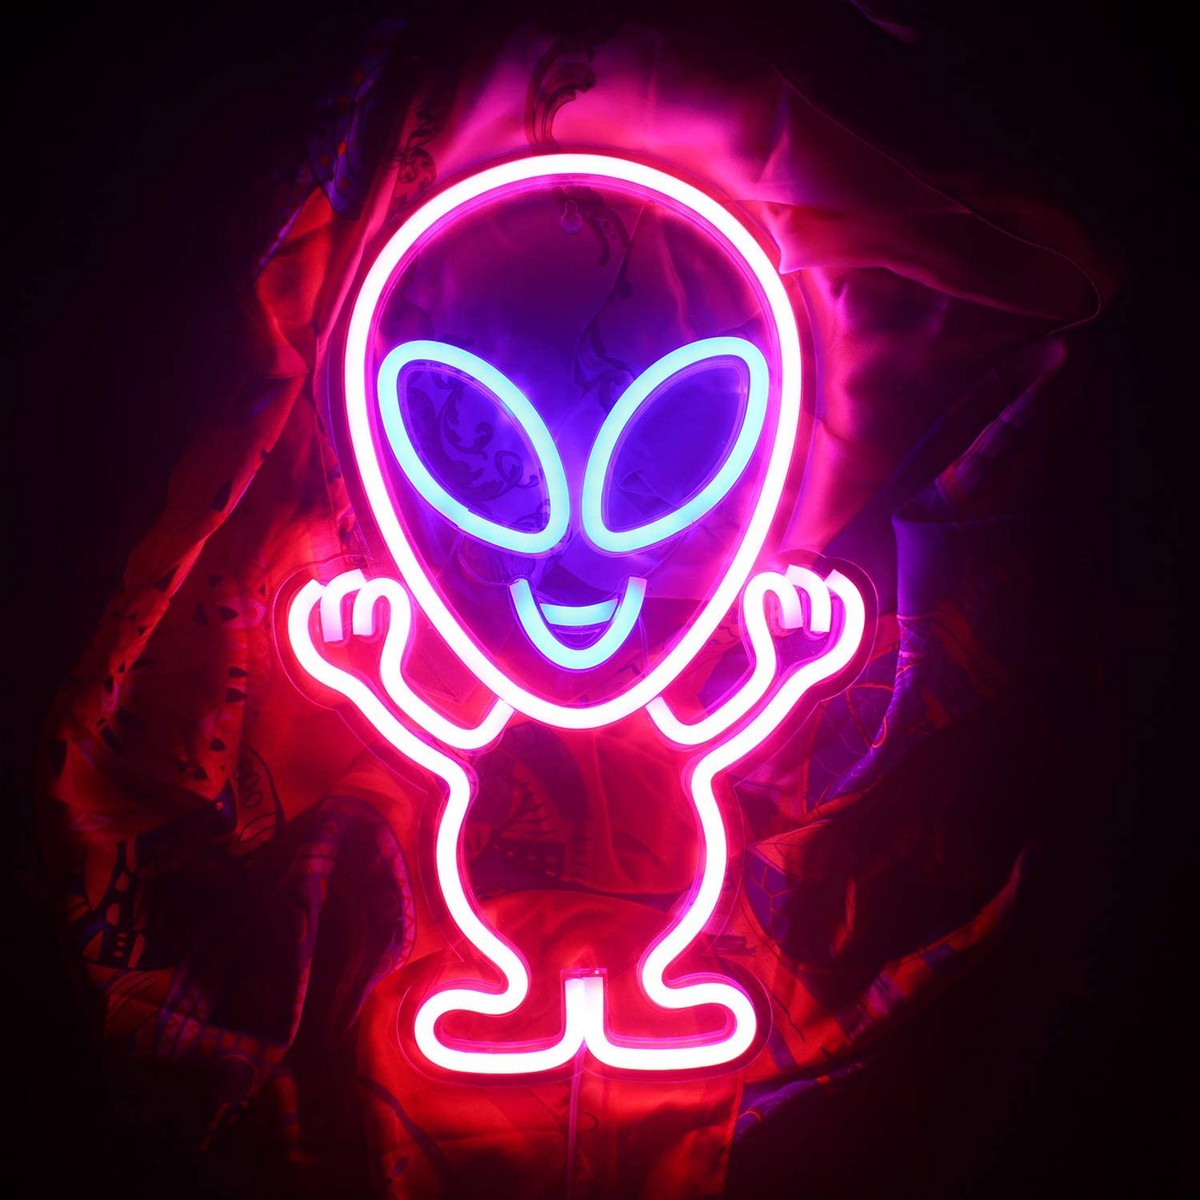 logo led neon brilhando na parede - alienígena